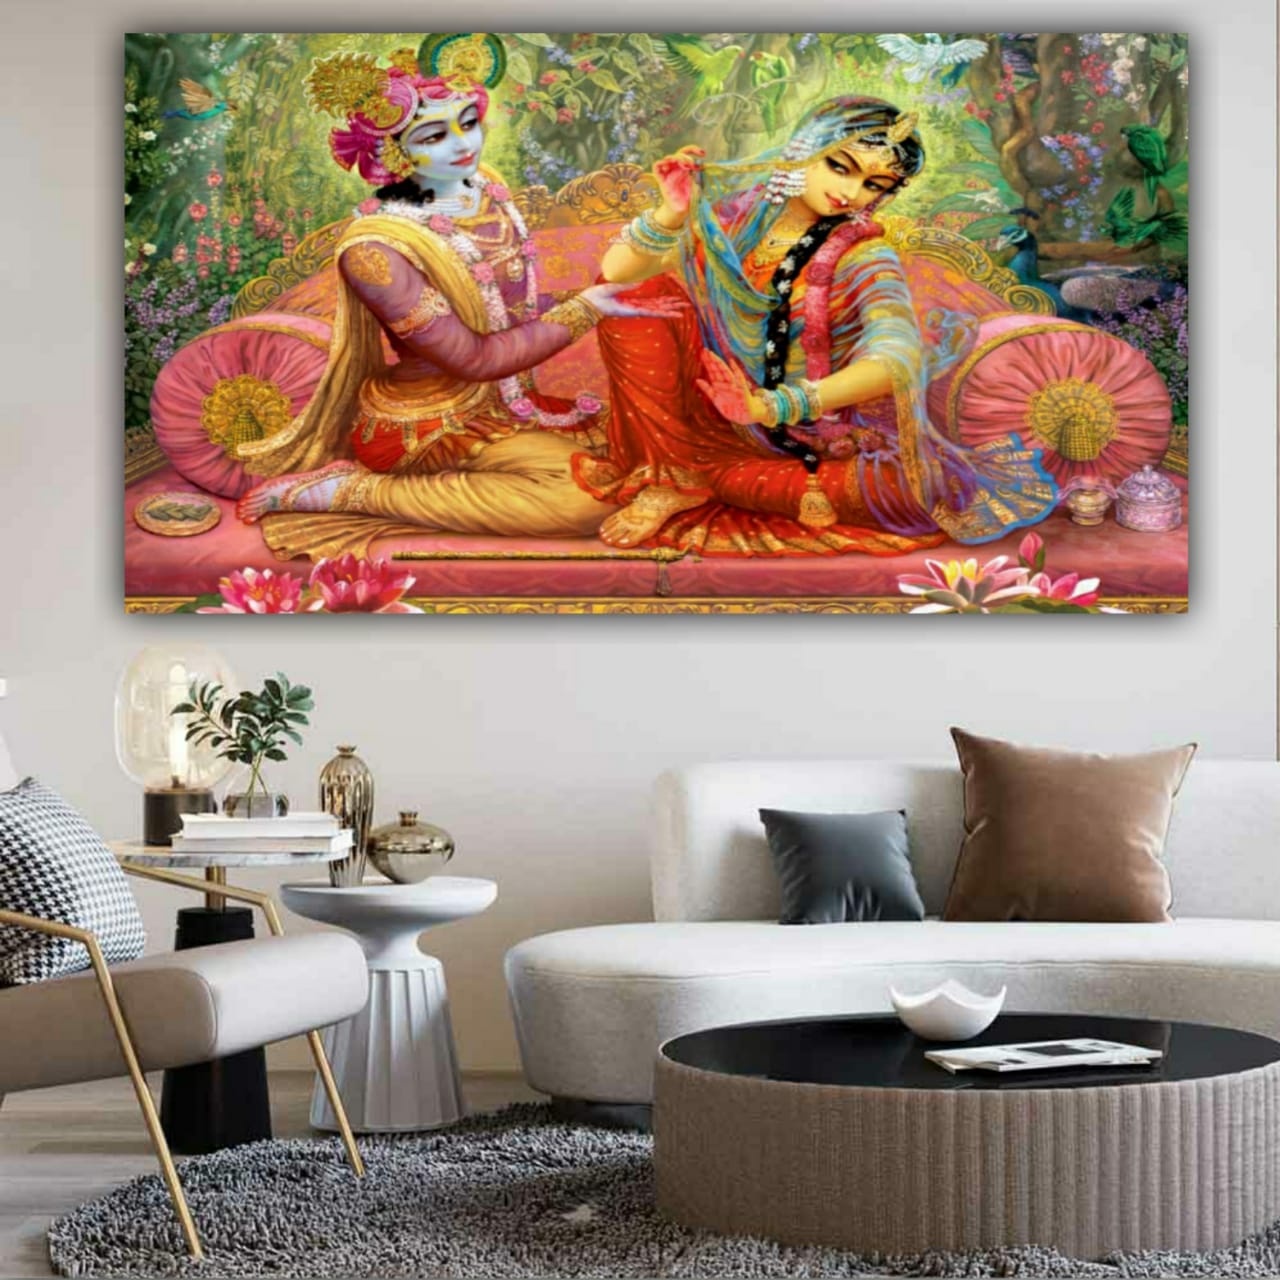 Radha krishna wall painting frame for living room wall decor